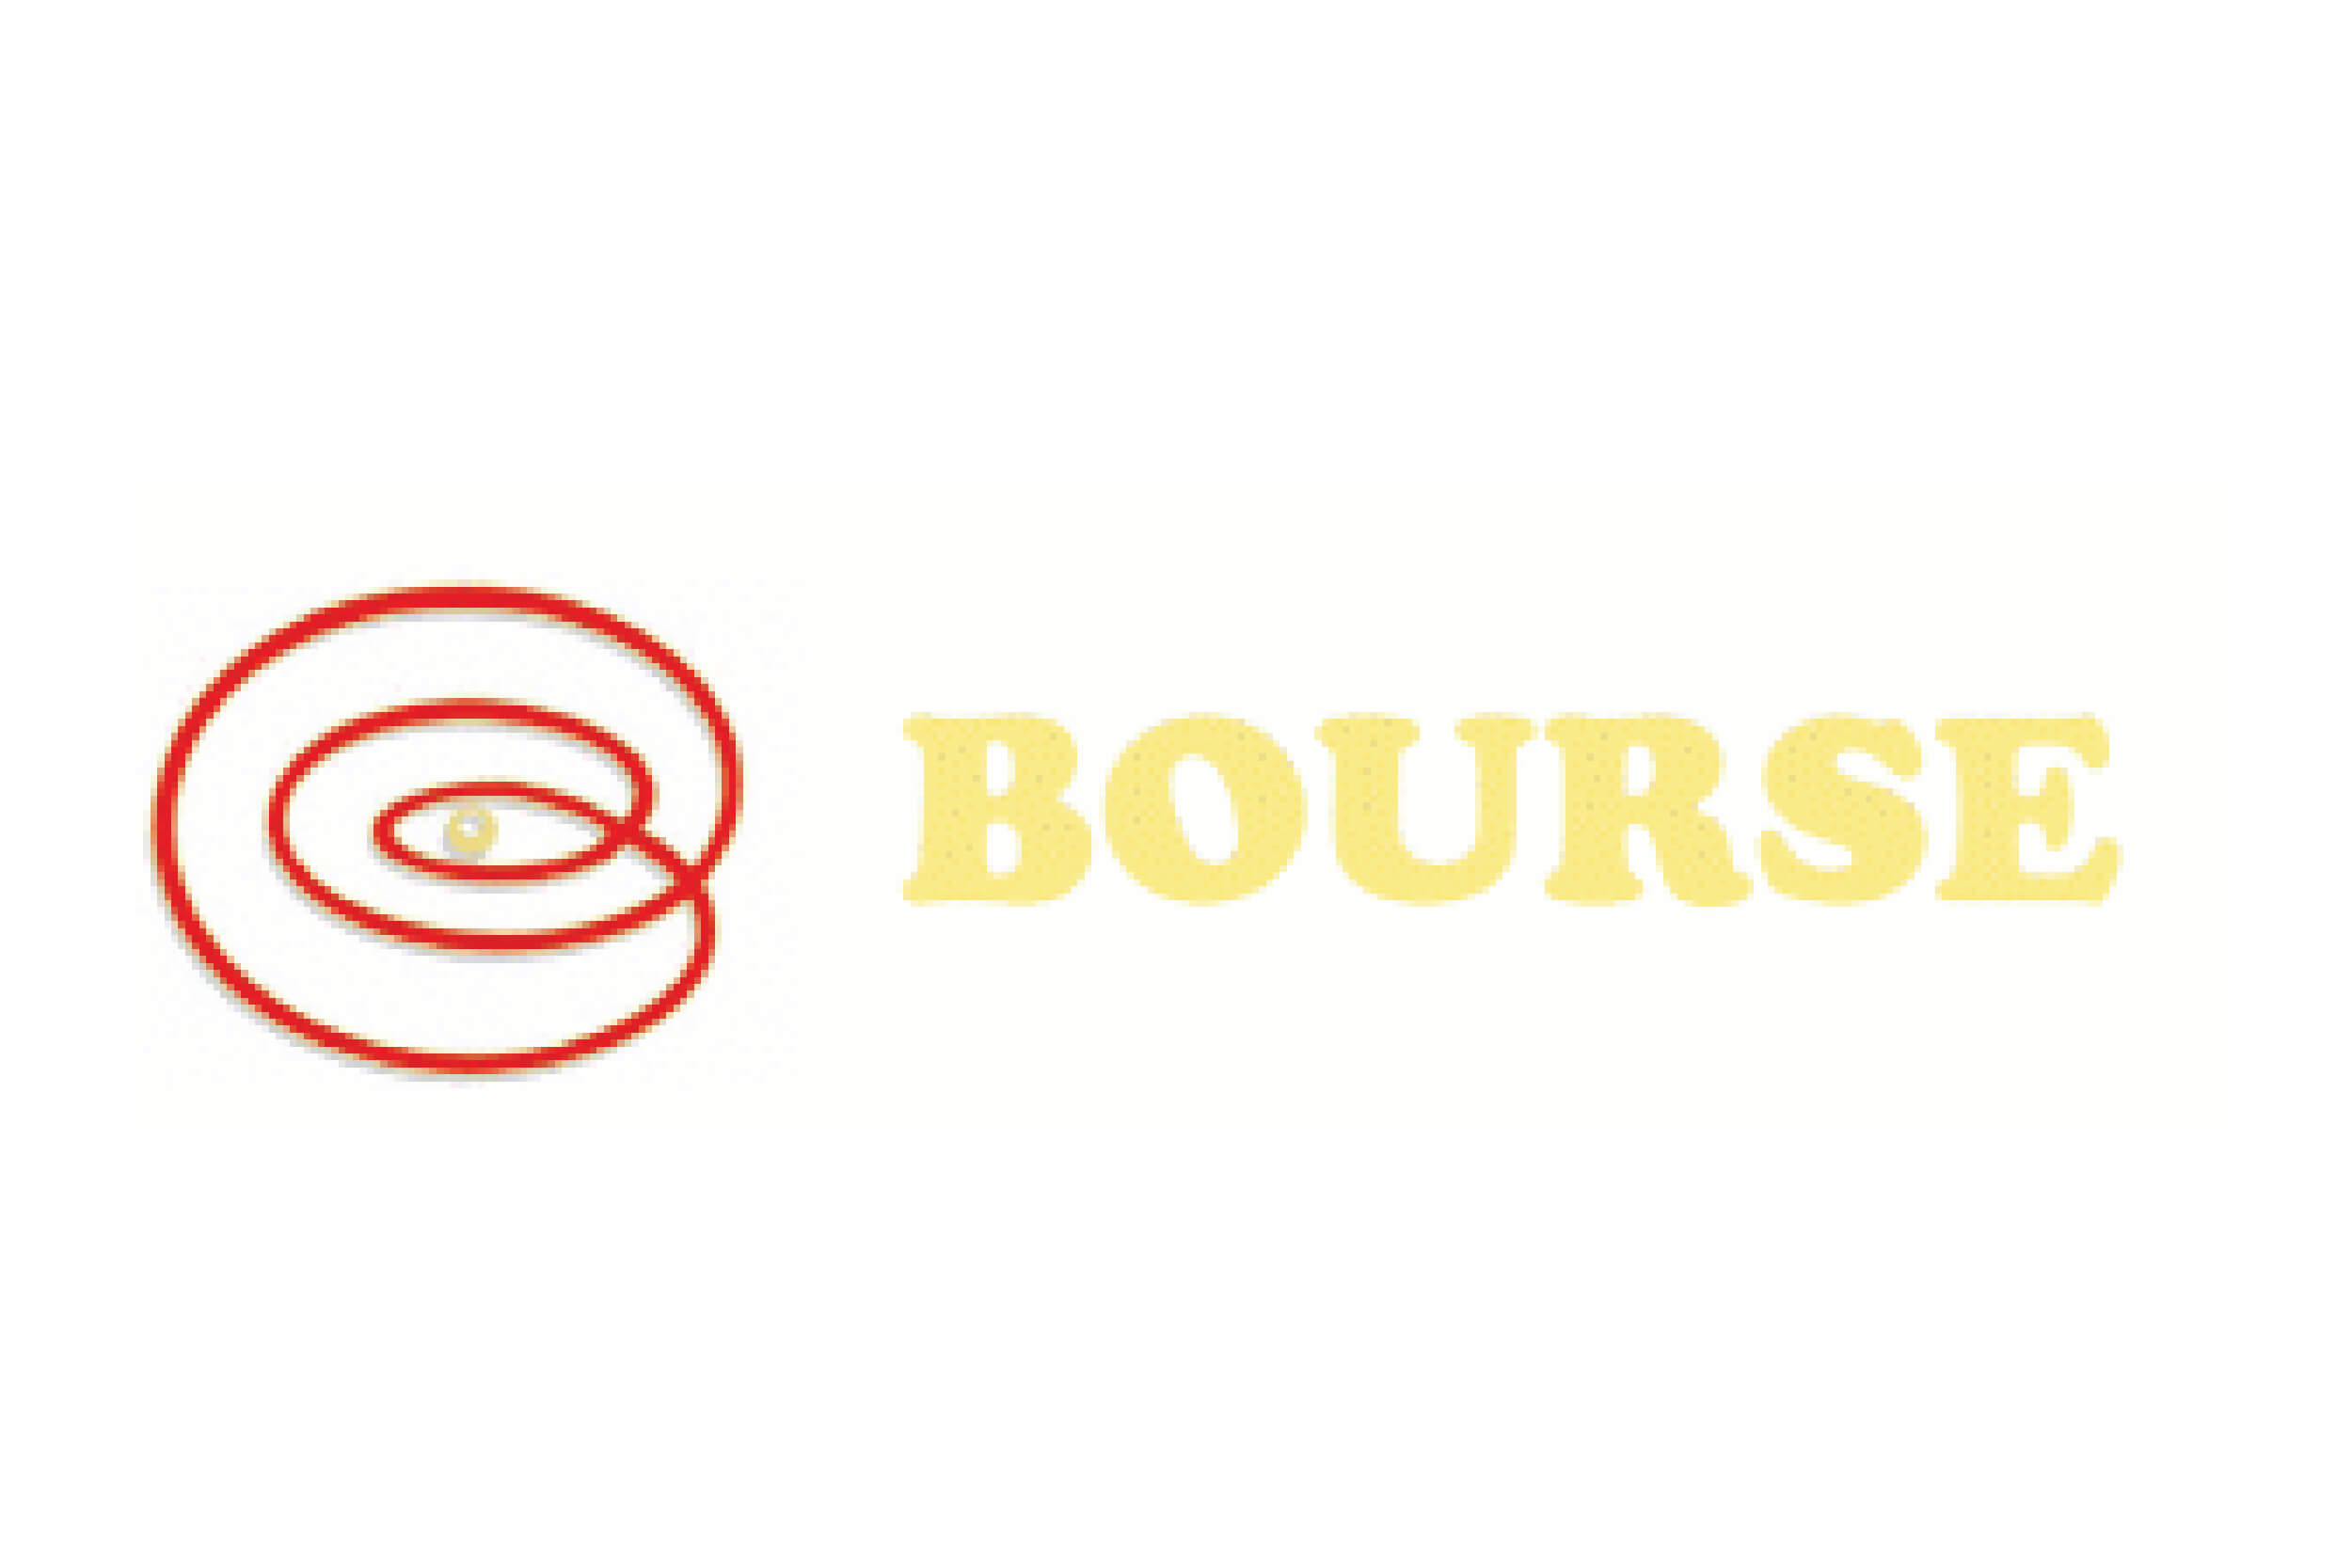 bourse logo